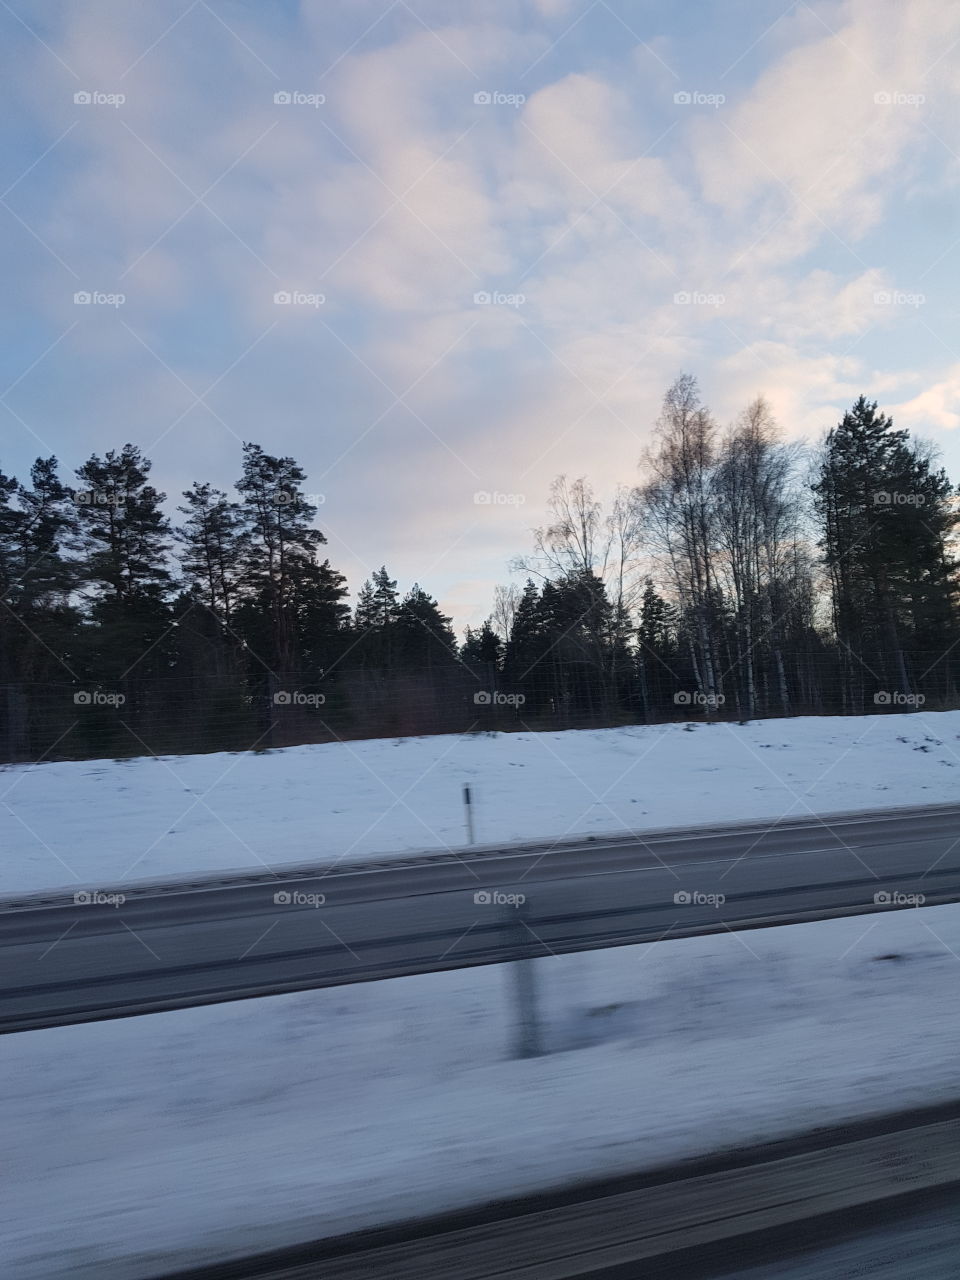 Snow, Winter, Landscape, Tree, Cold